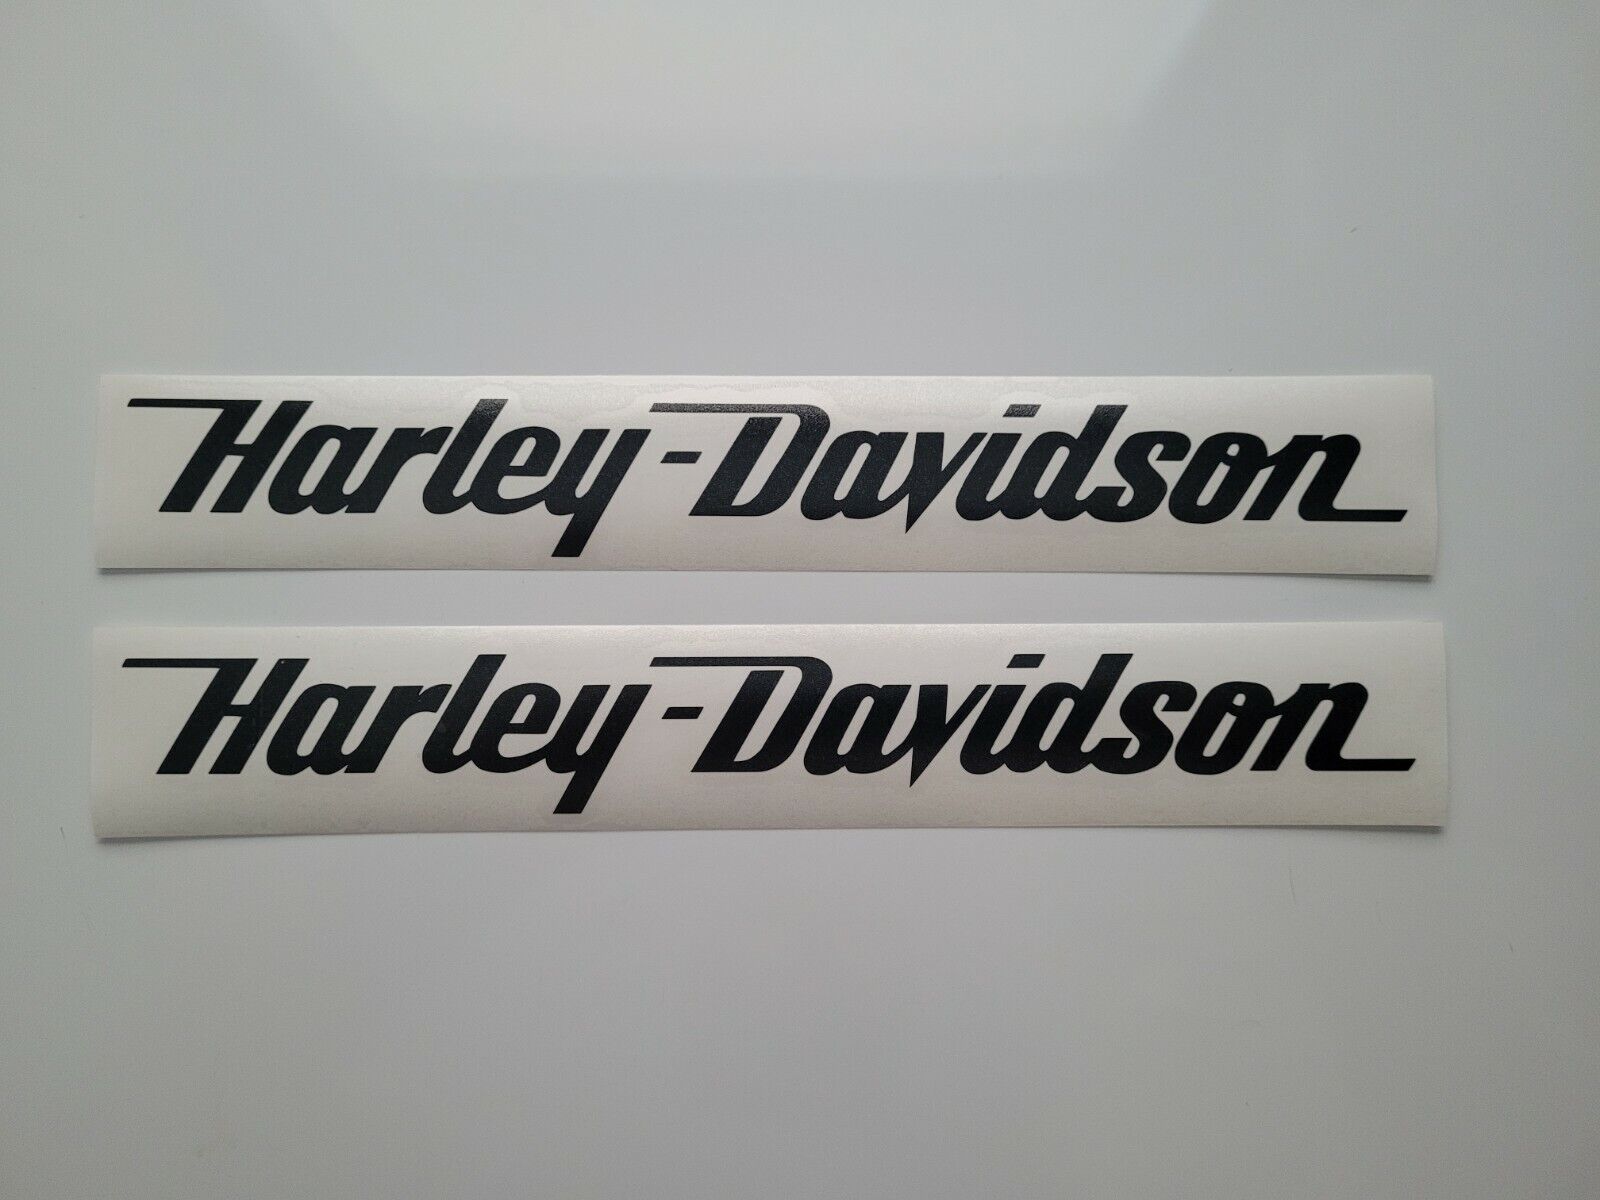 (Black) Harley Davidson sticker vinyl decal 12" x 1.5" set of 2